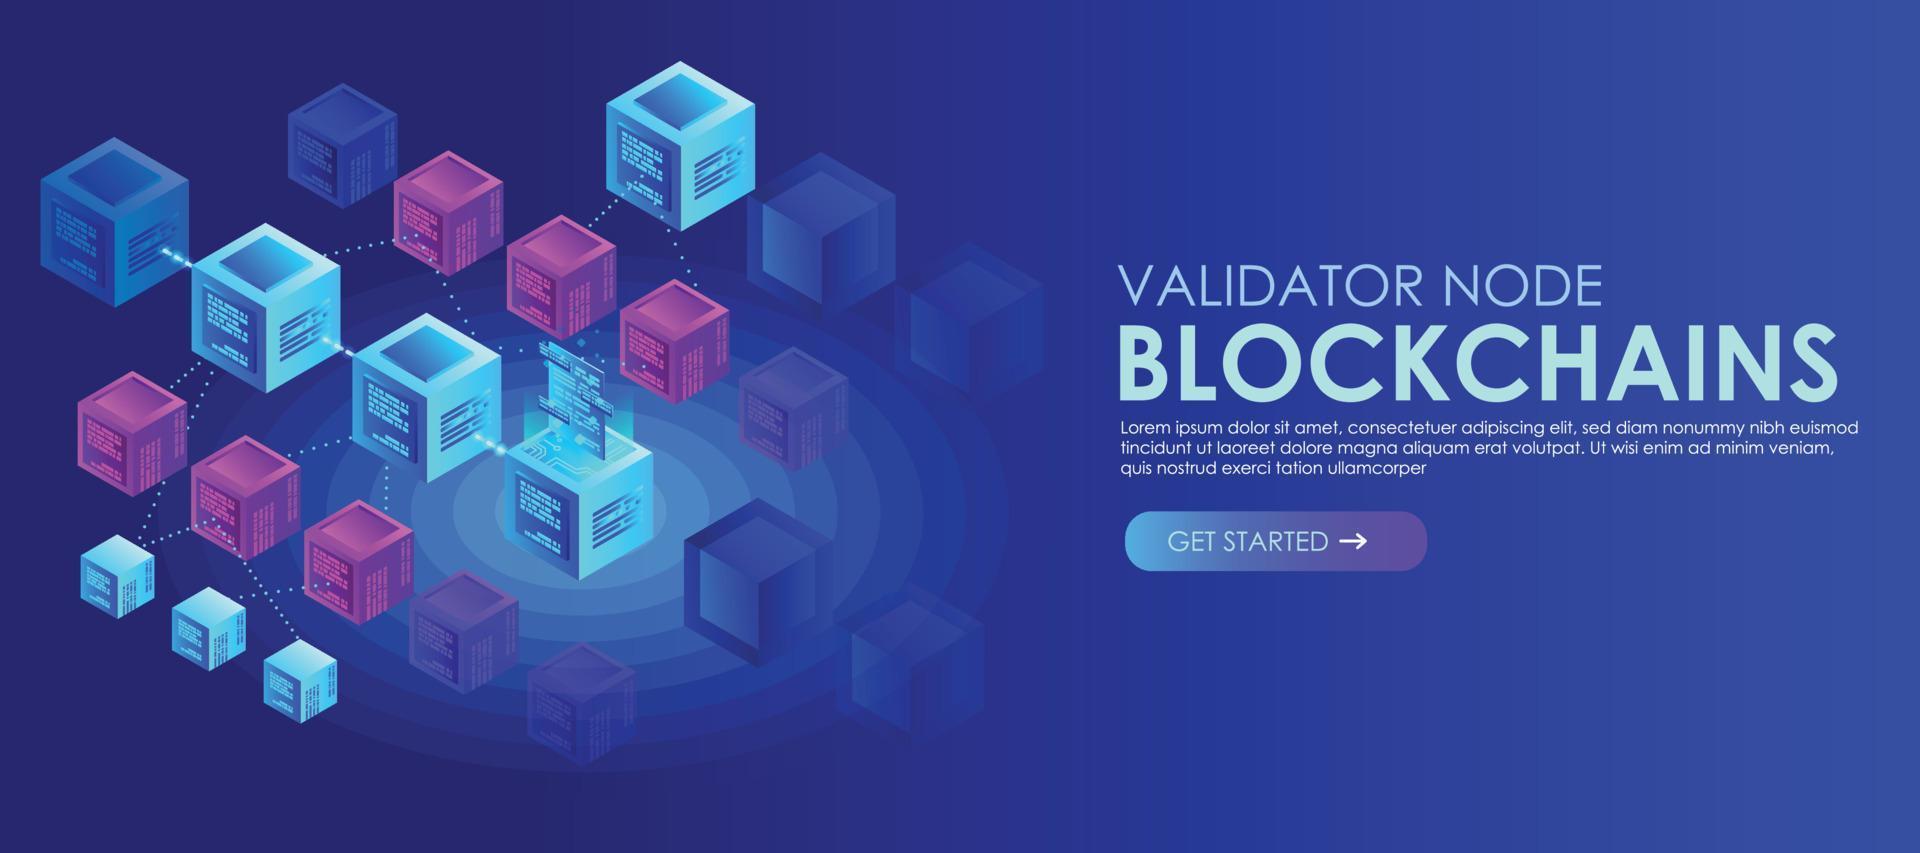 bloccare validatore nodo blockchain isometrico vettore